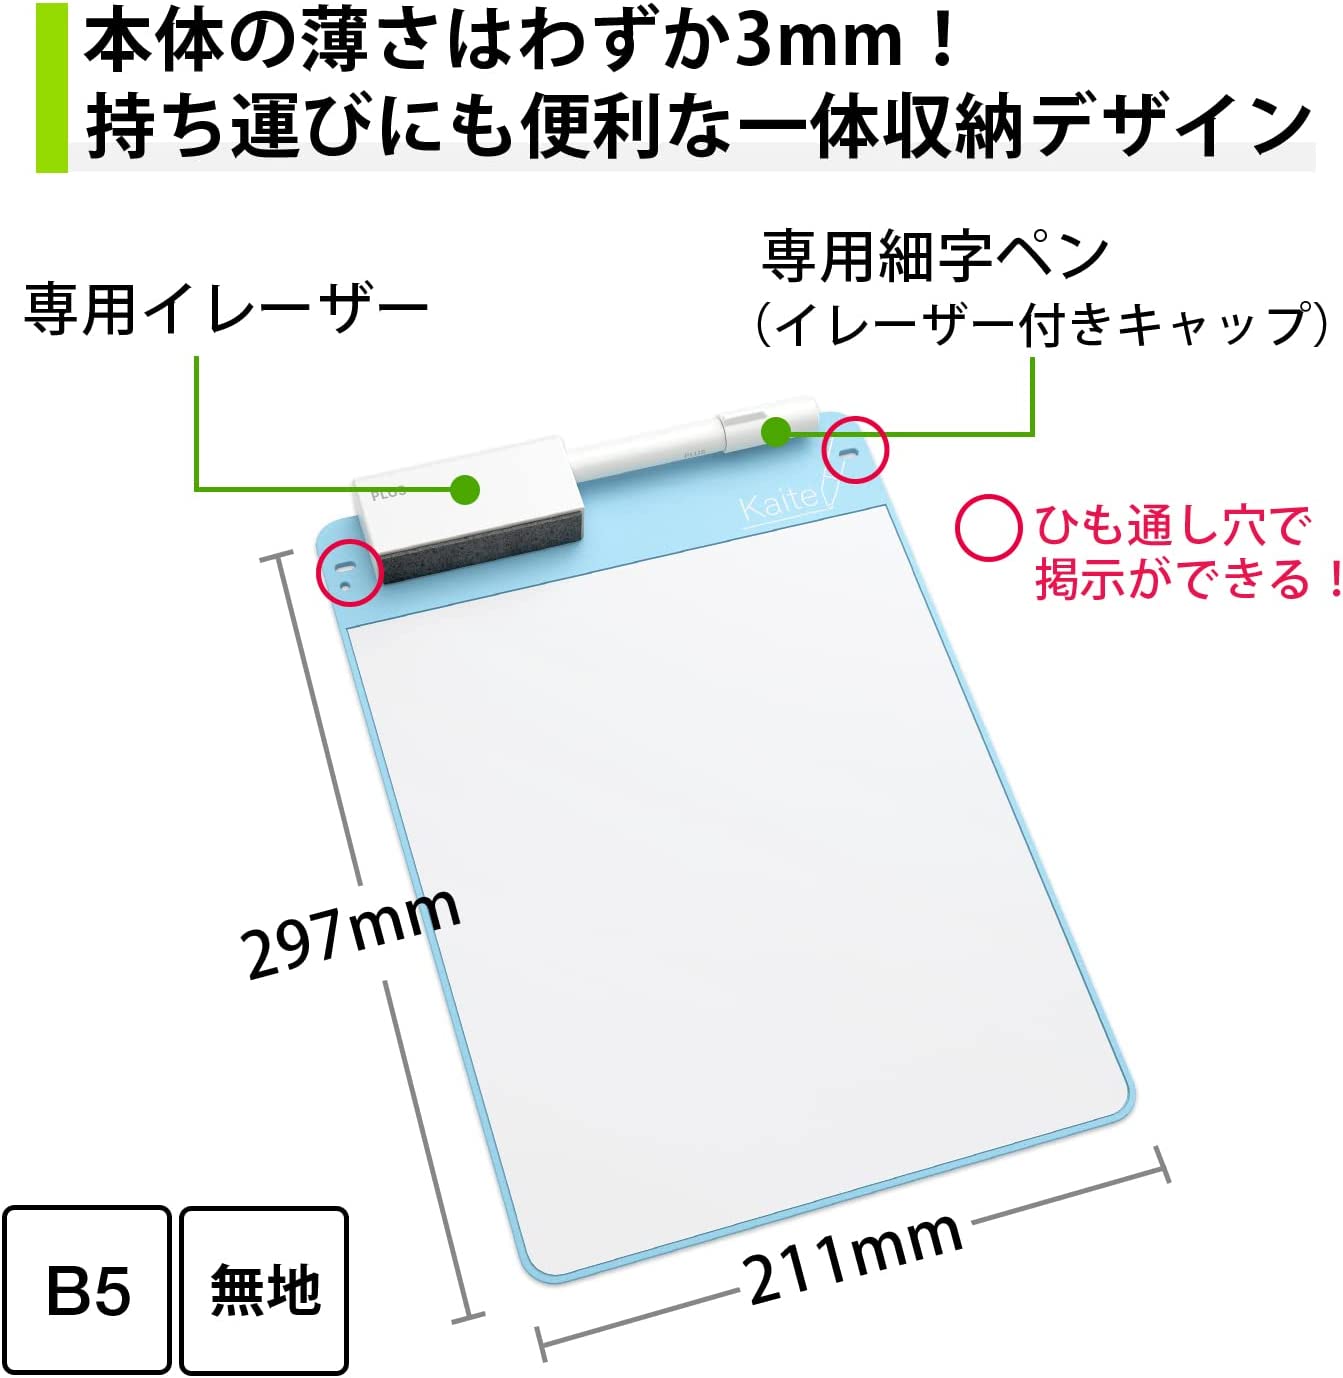 Kaite 2S 10.3 inch Battery-Free Writing Slate